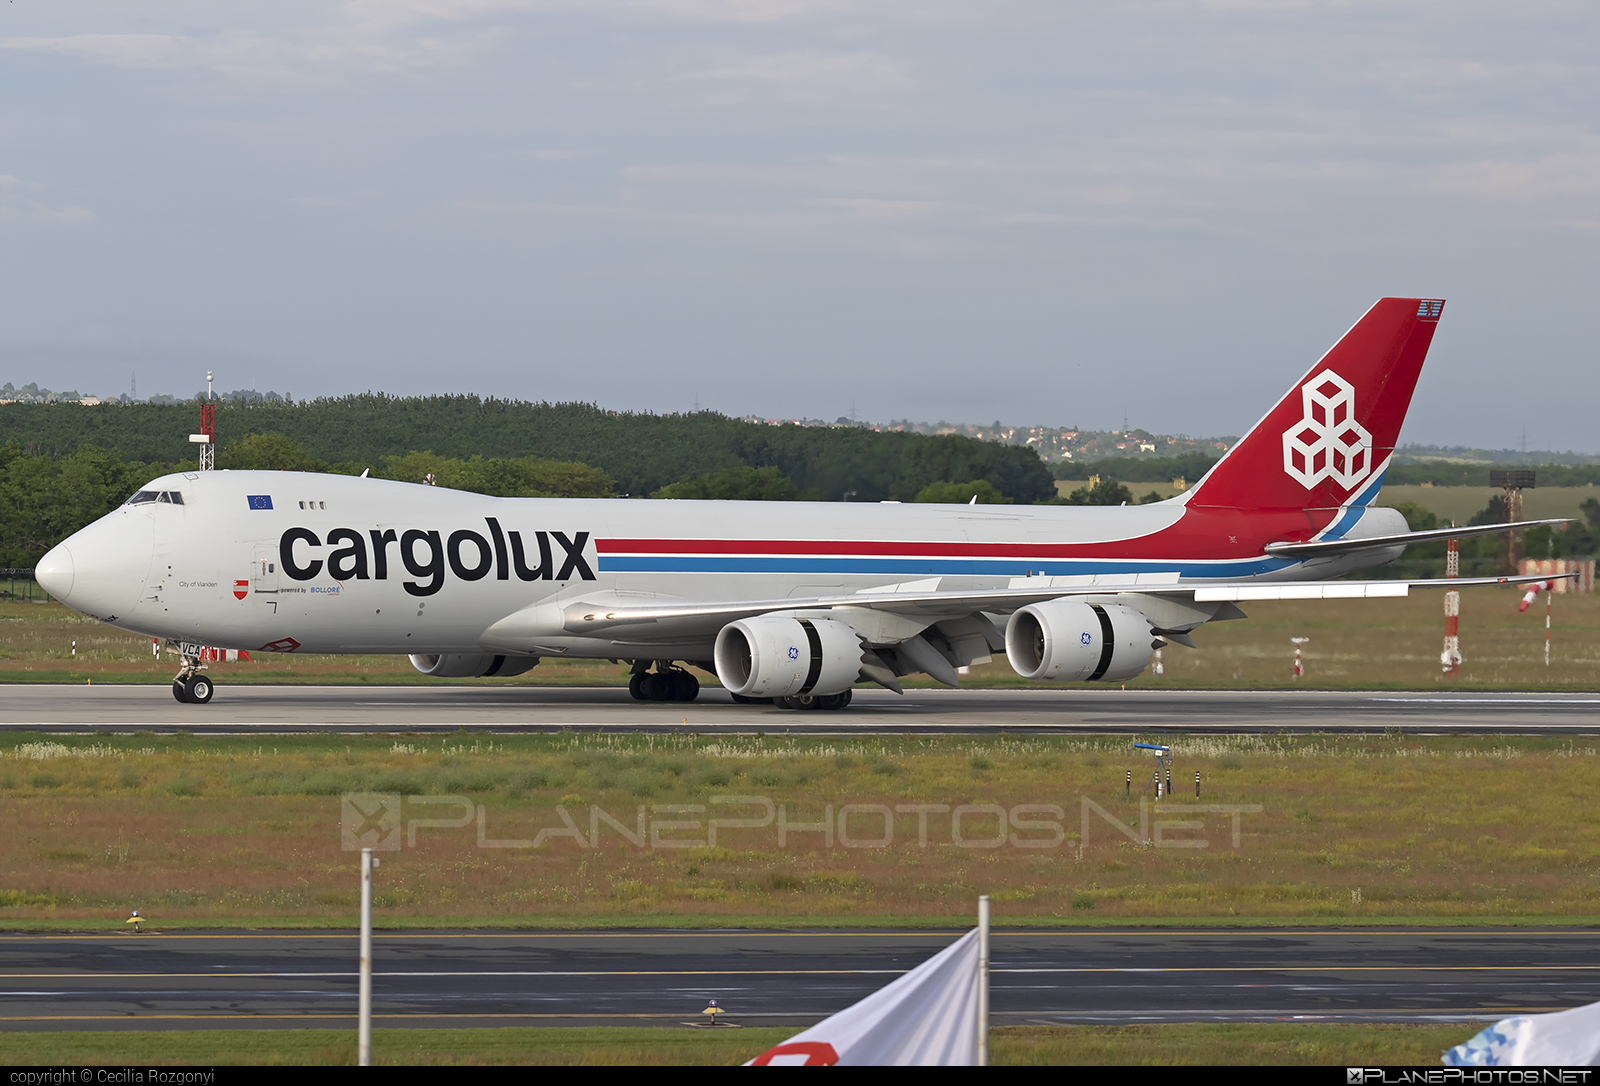 Boeing 747-8F - LX-VCA operated by Cargolux Airlines International #b747 #b747f #b747freighter #boeing #boeing747 #cargolux #jumbo